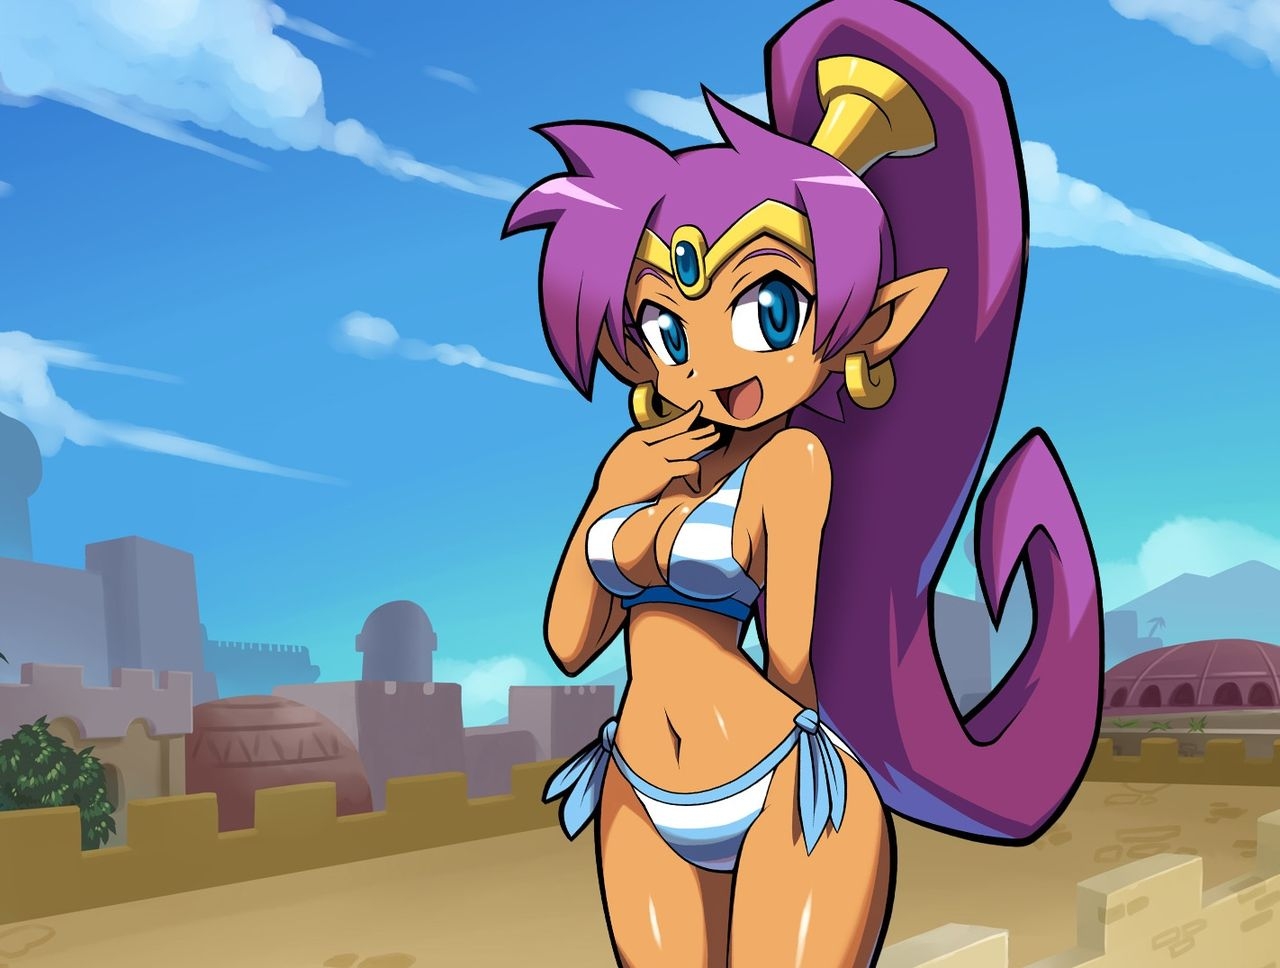 Shantae Manual + Official Art 111